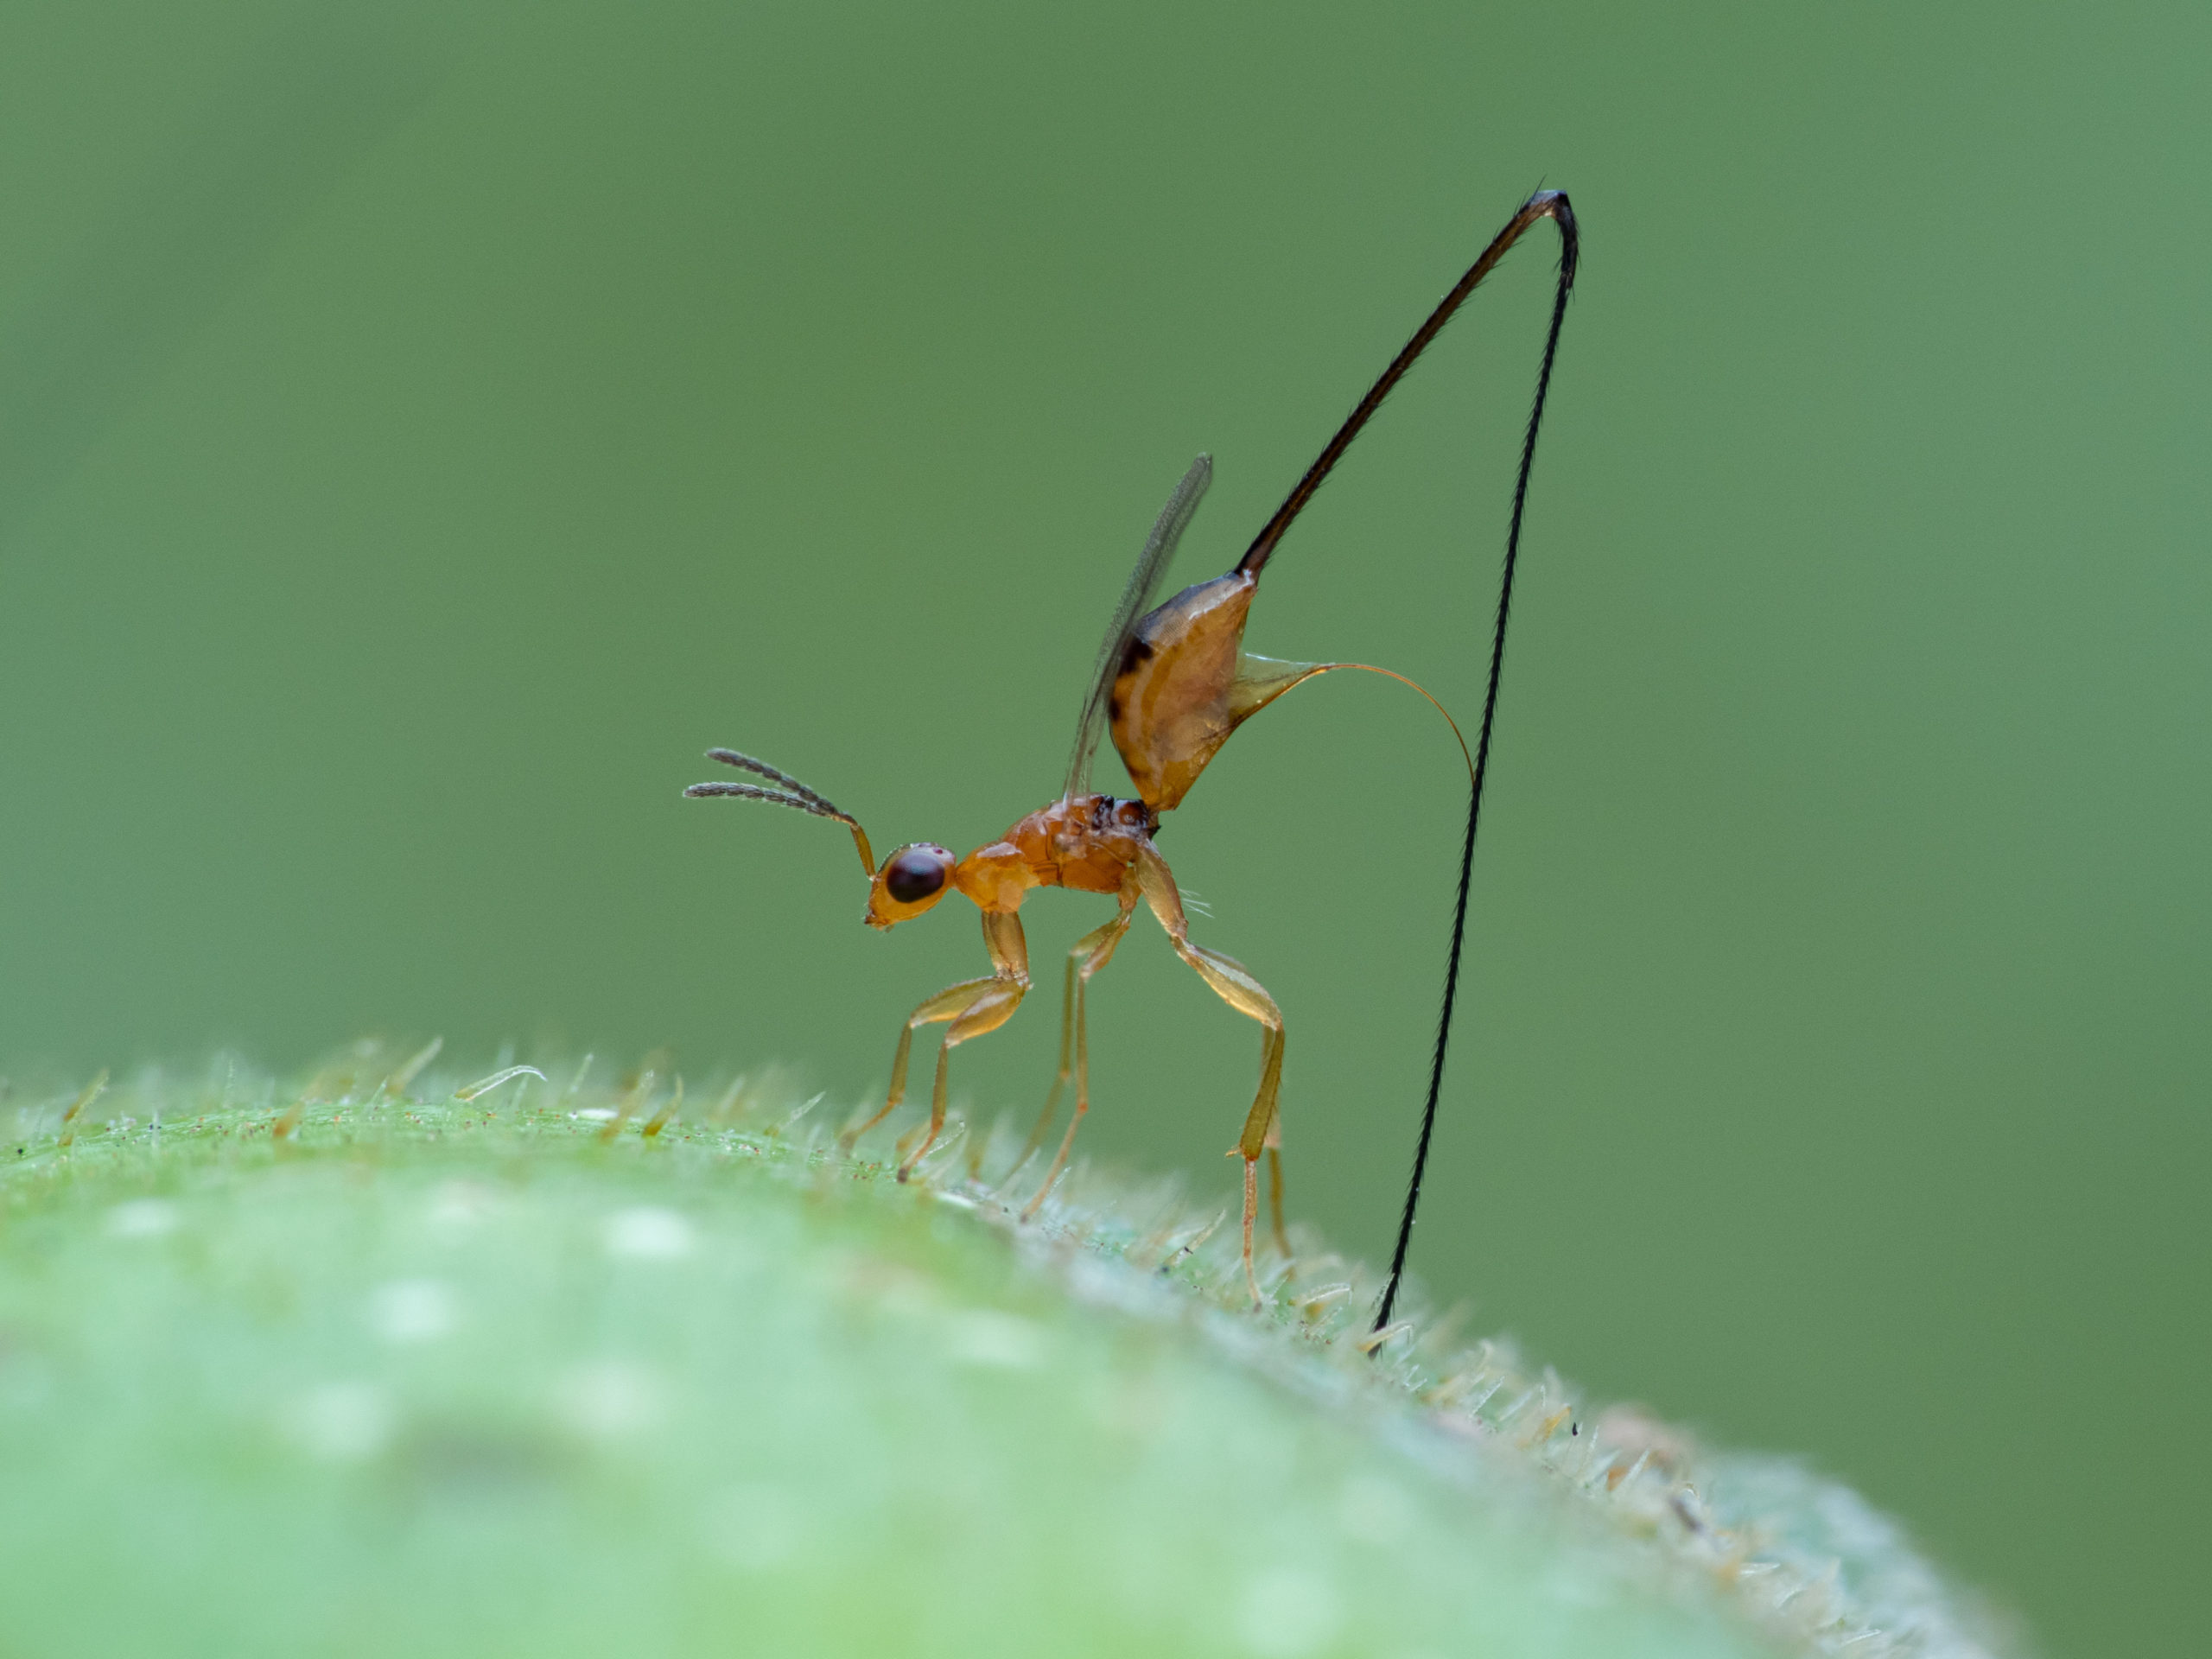 Female ant laying its eggs - oviposting